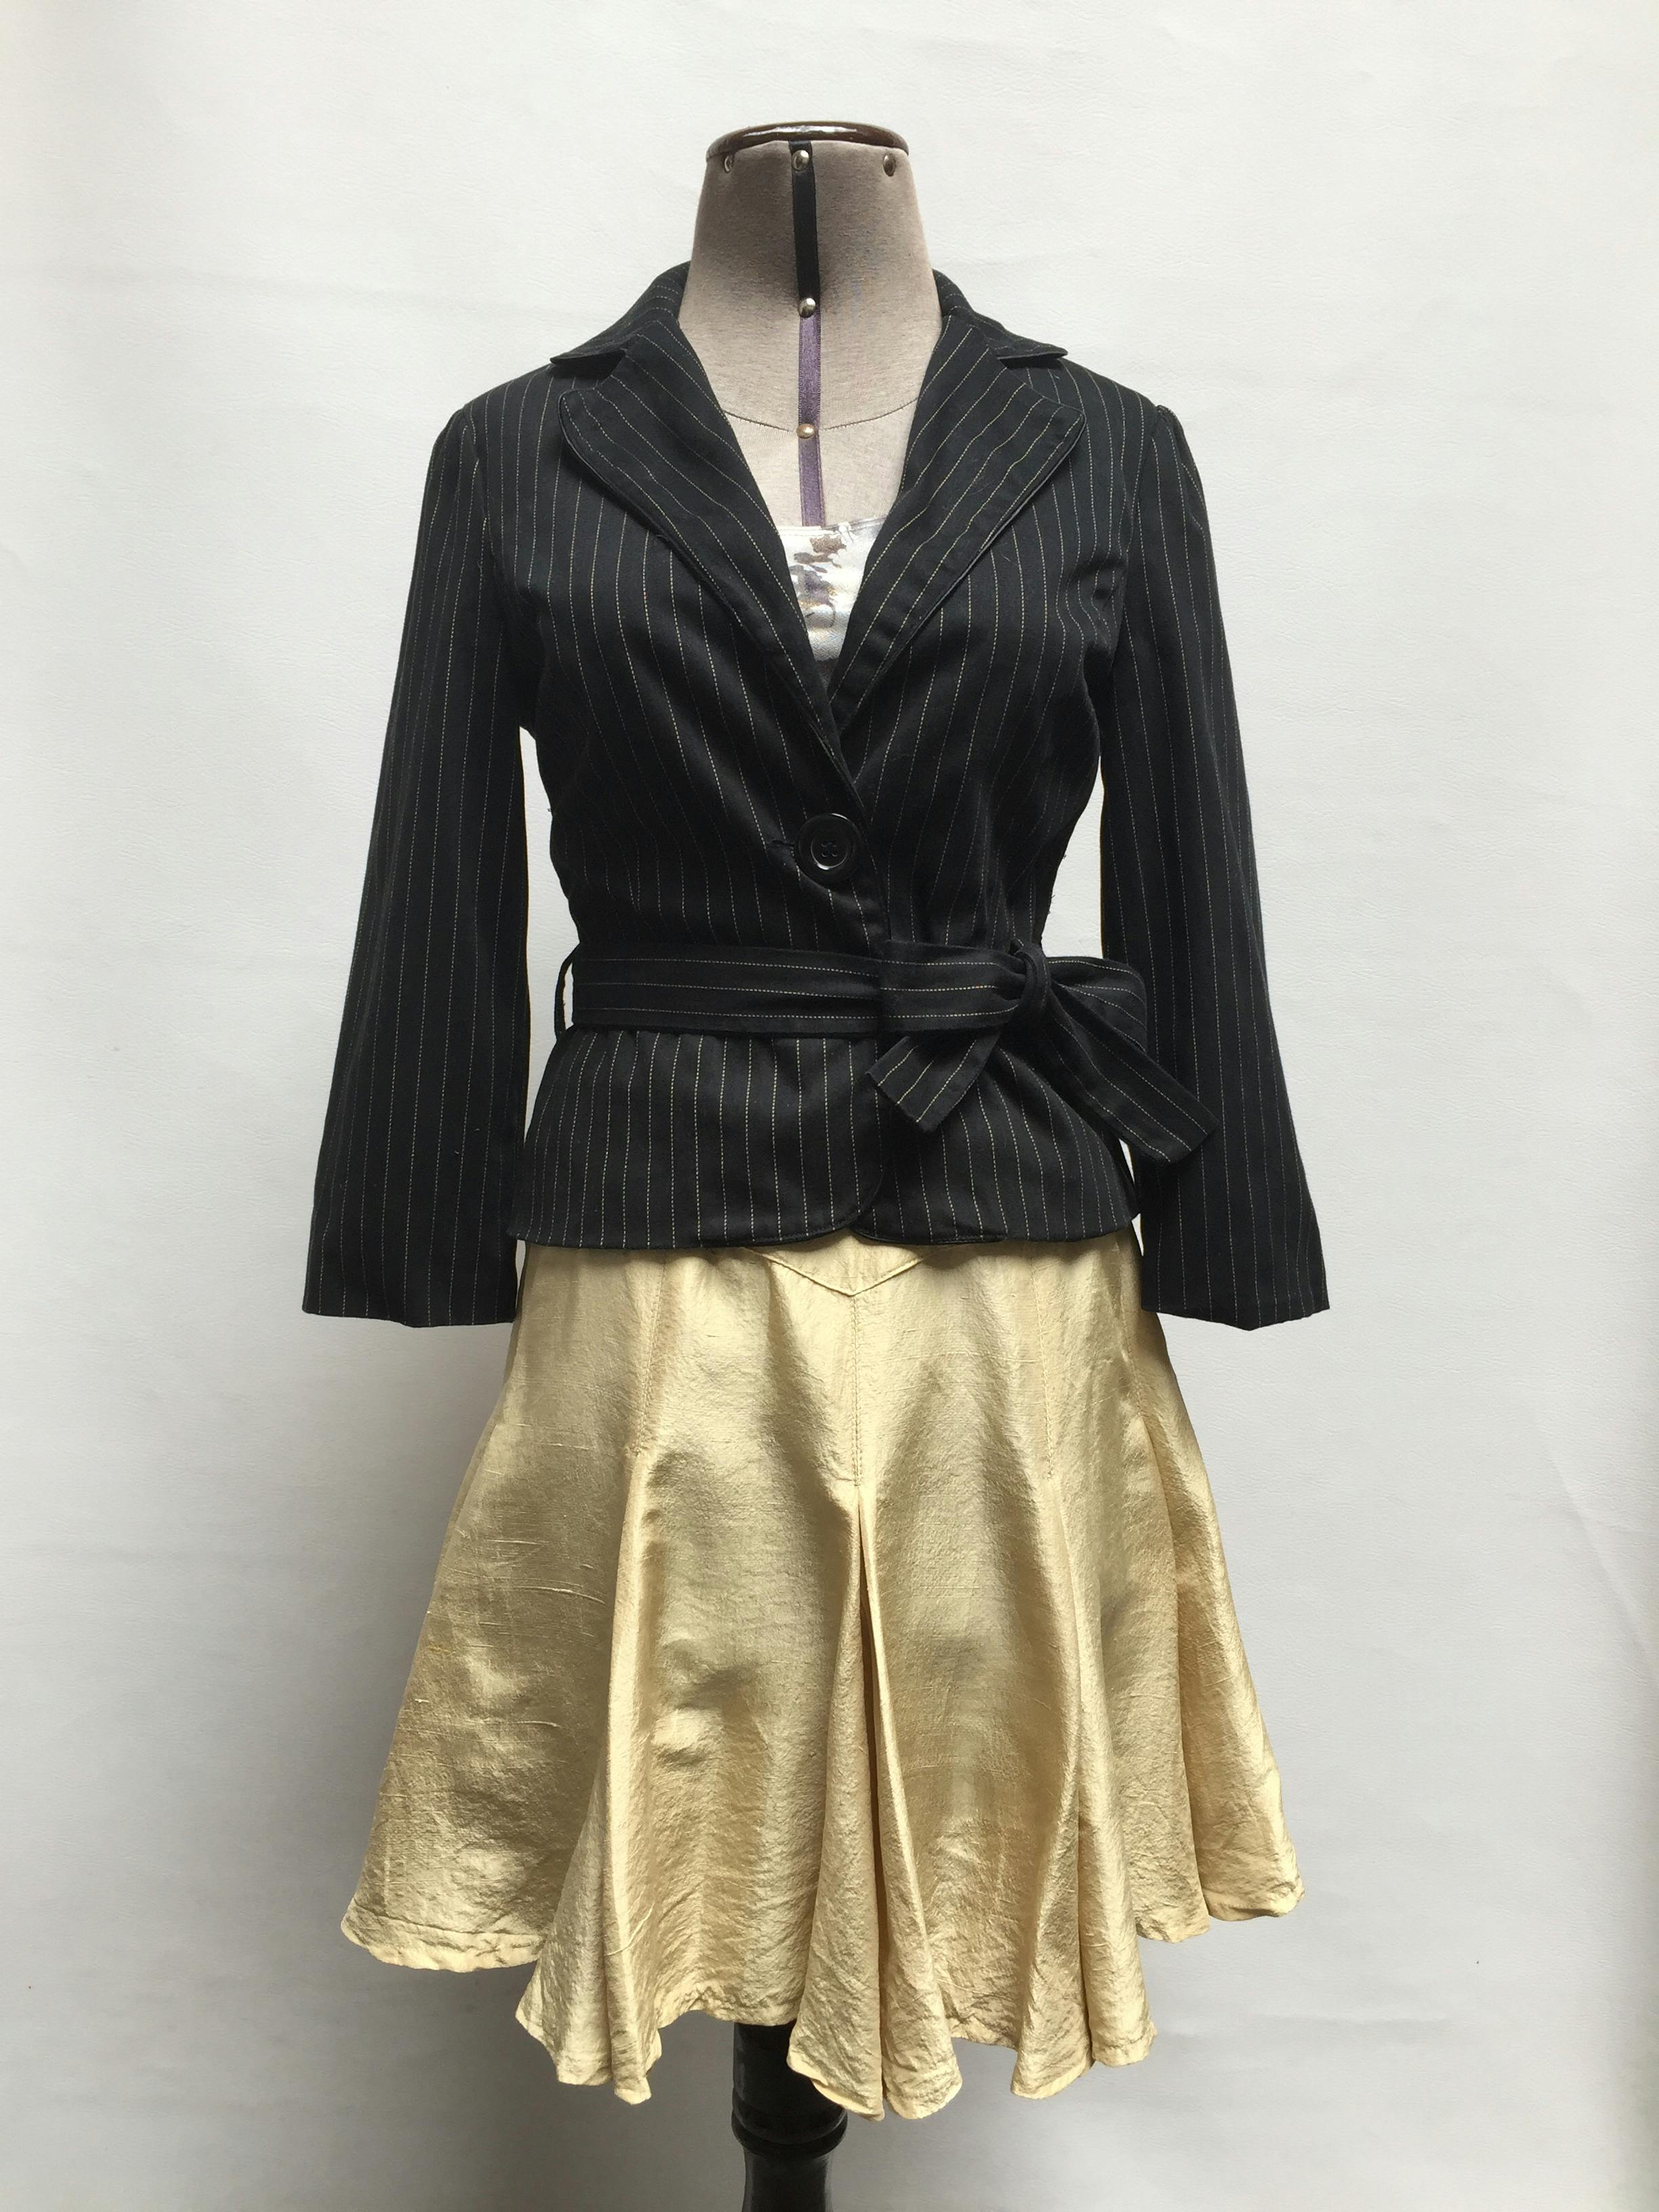 Falda vintage AnnTjian for Kenna,  100% seda dorada, godet campana, cierre y botón posterior. Largo 50cm
Talla XS/S (pretina 67cm)